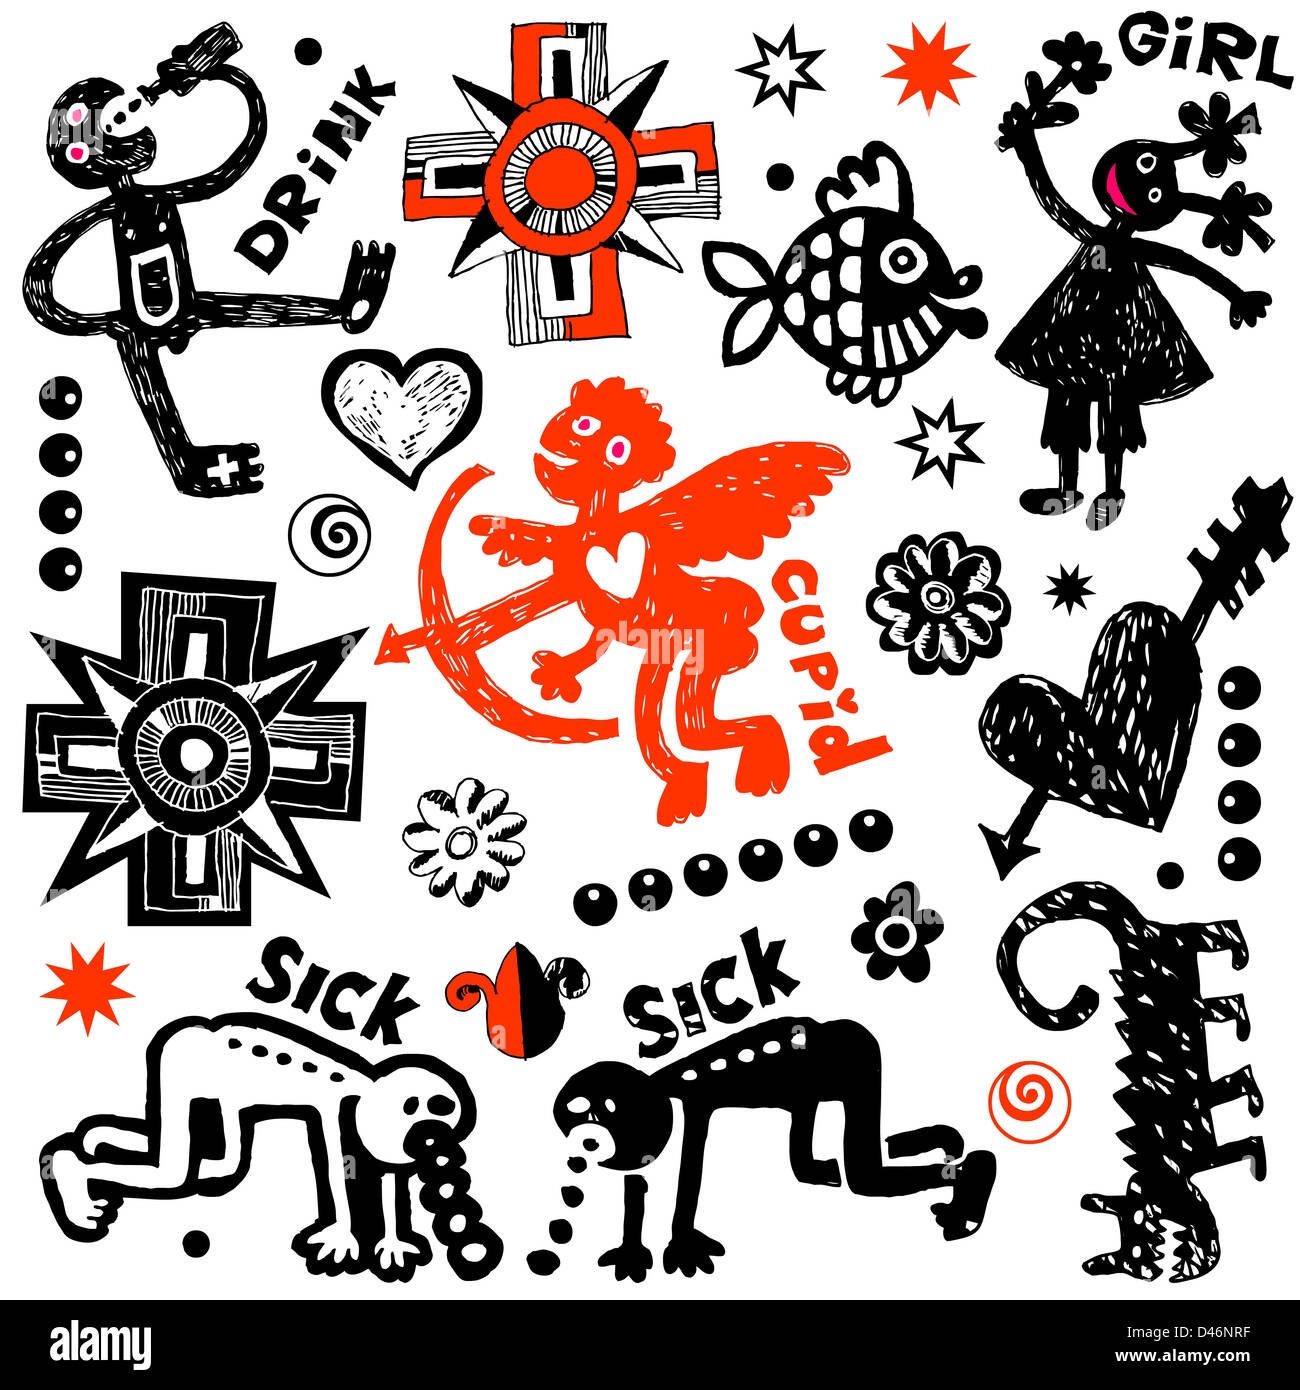 crazy doodle set, hand drawn design elements Stock Photo